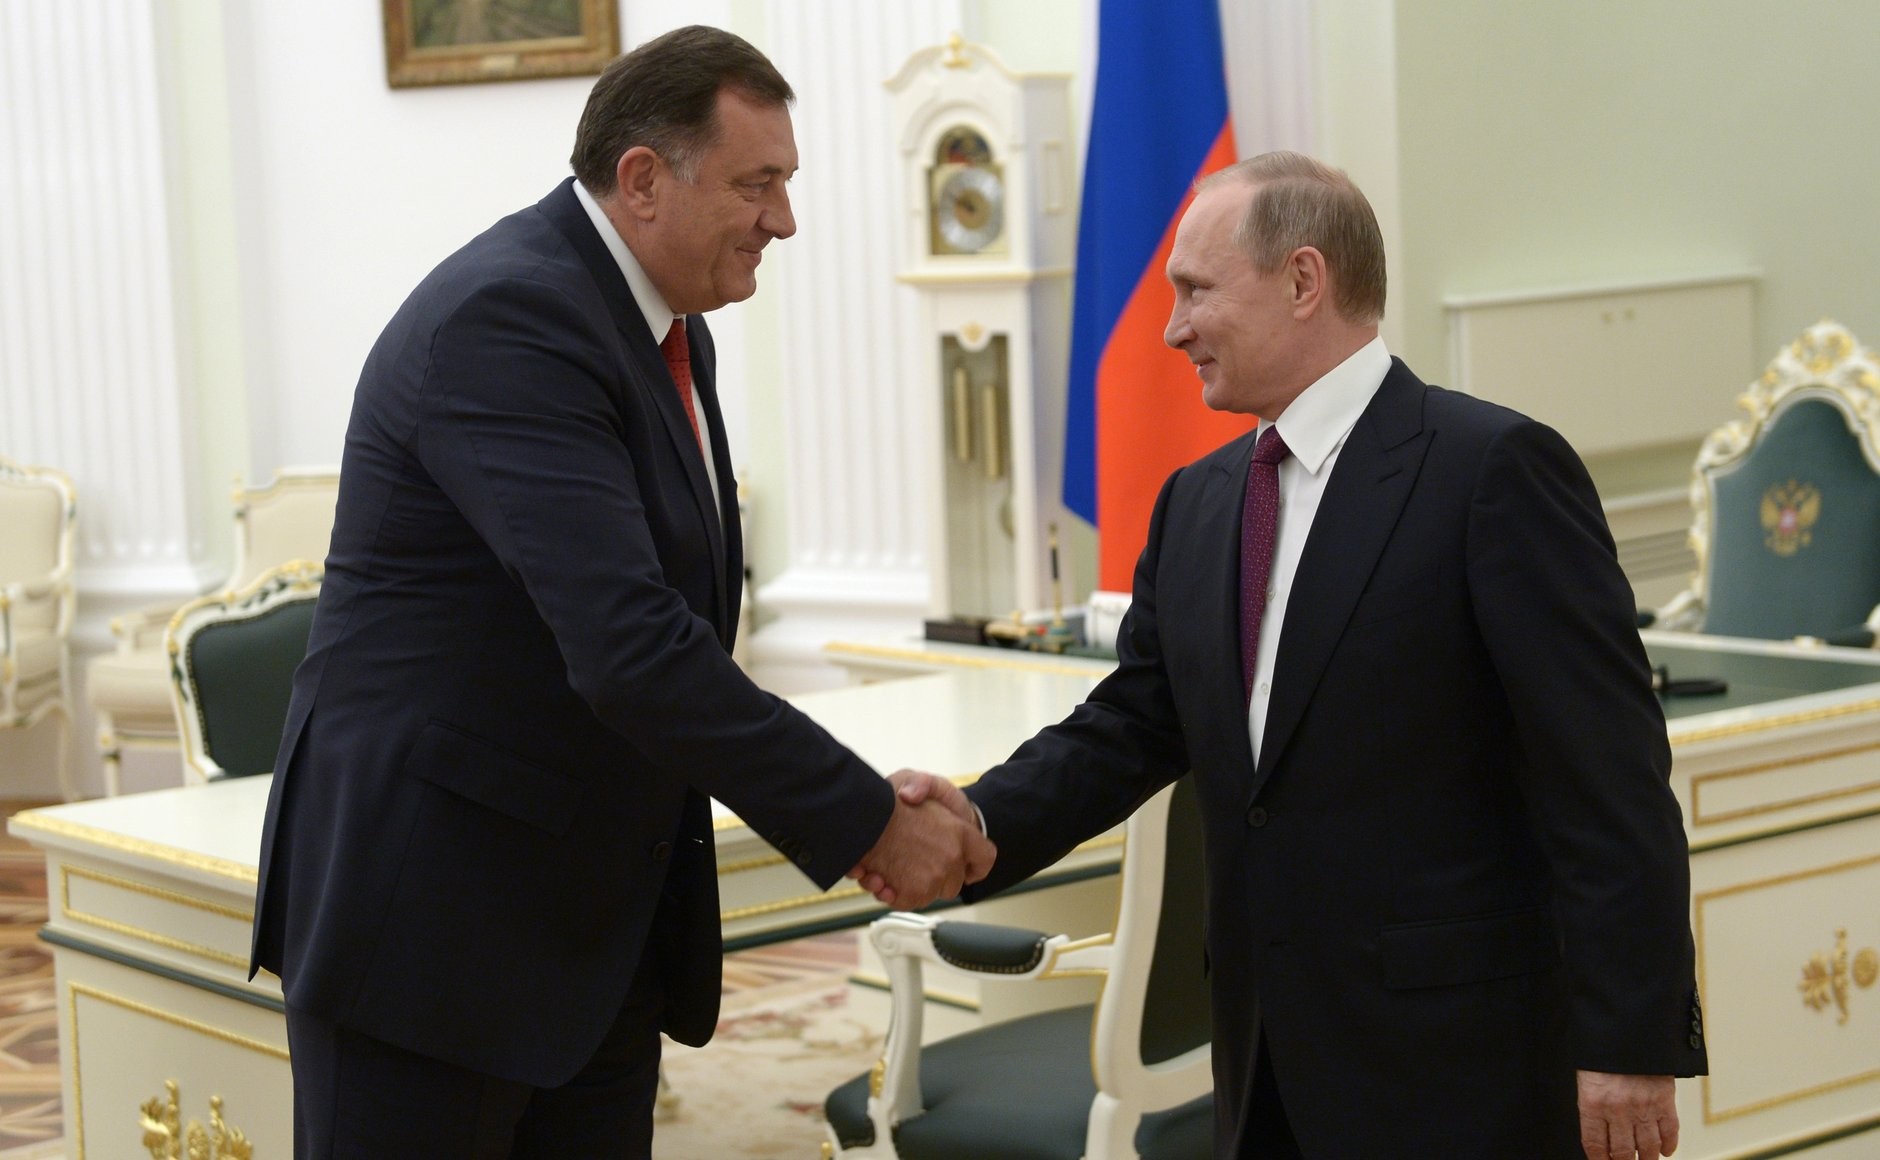 Republika Srpska President Milorad Dodik and Vladimir Putin / Photo: kremlin.ru